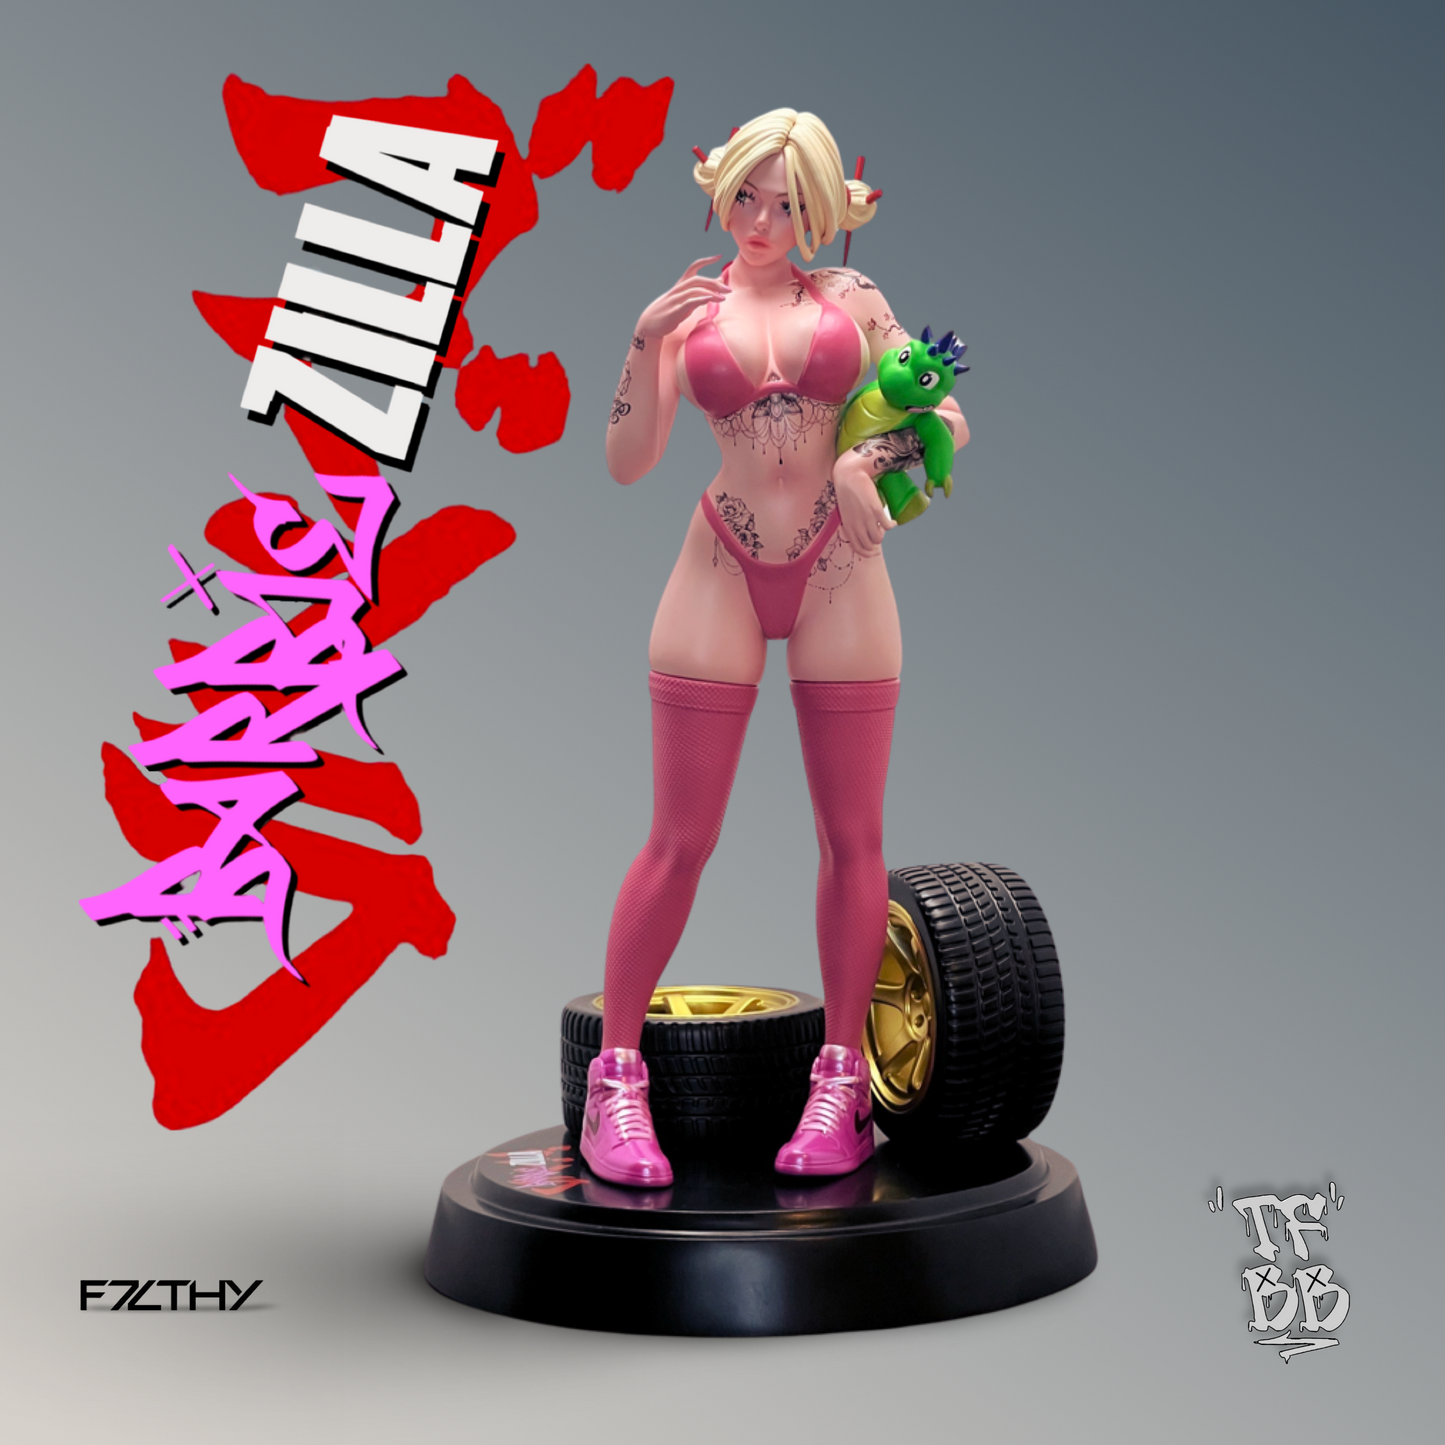 BarbieZilla The GTR Queen 1/6 Scale Art Figure (Pre-Order)